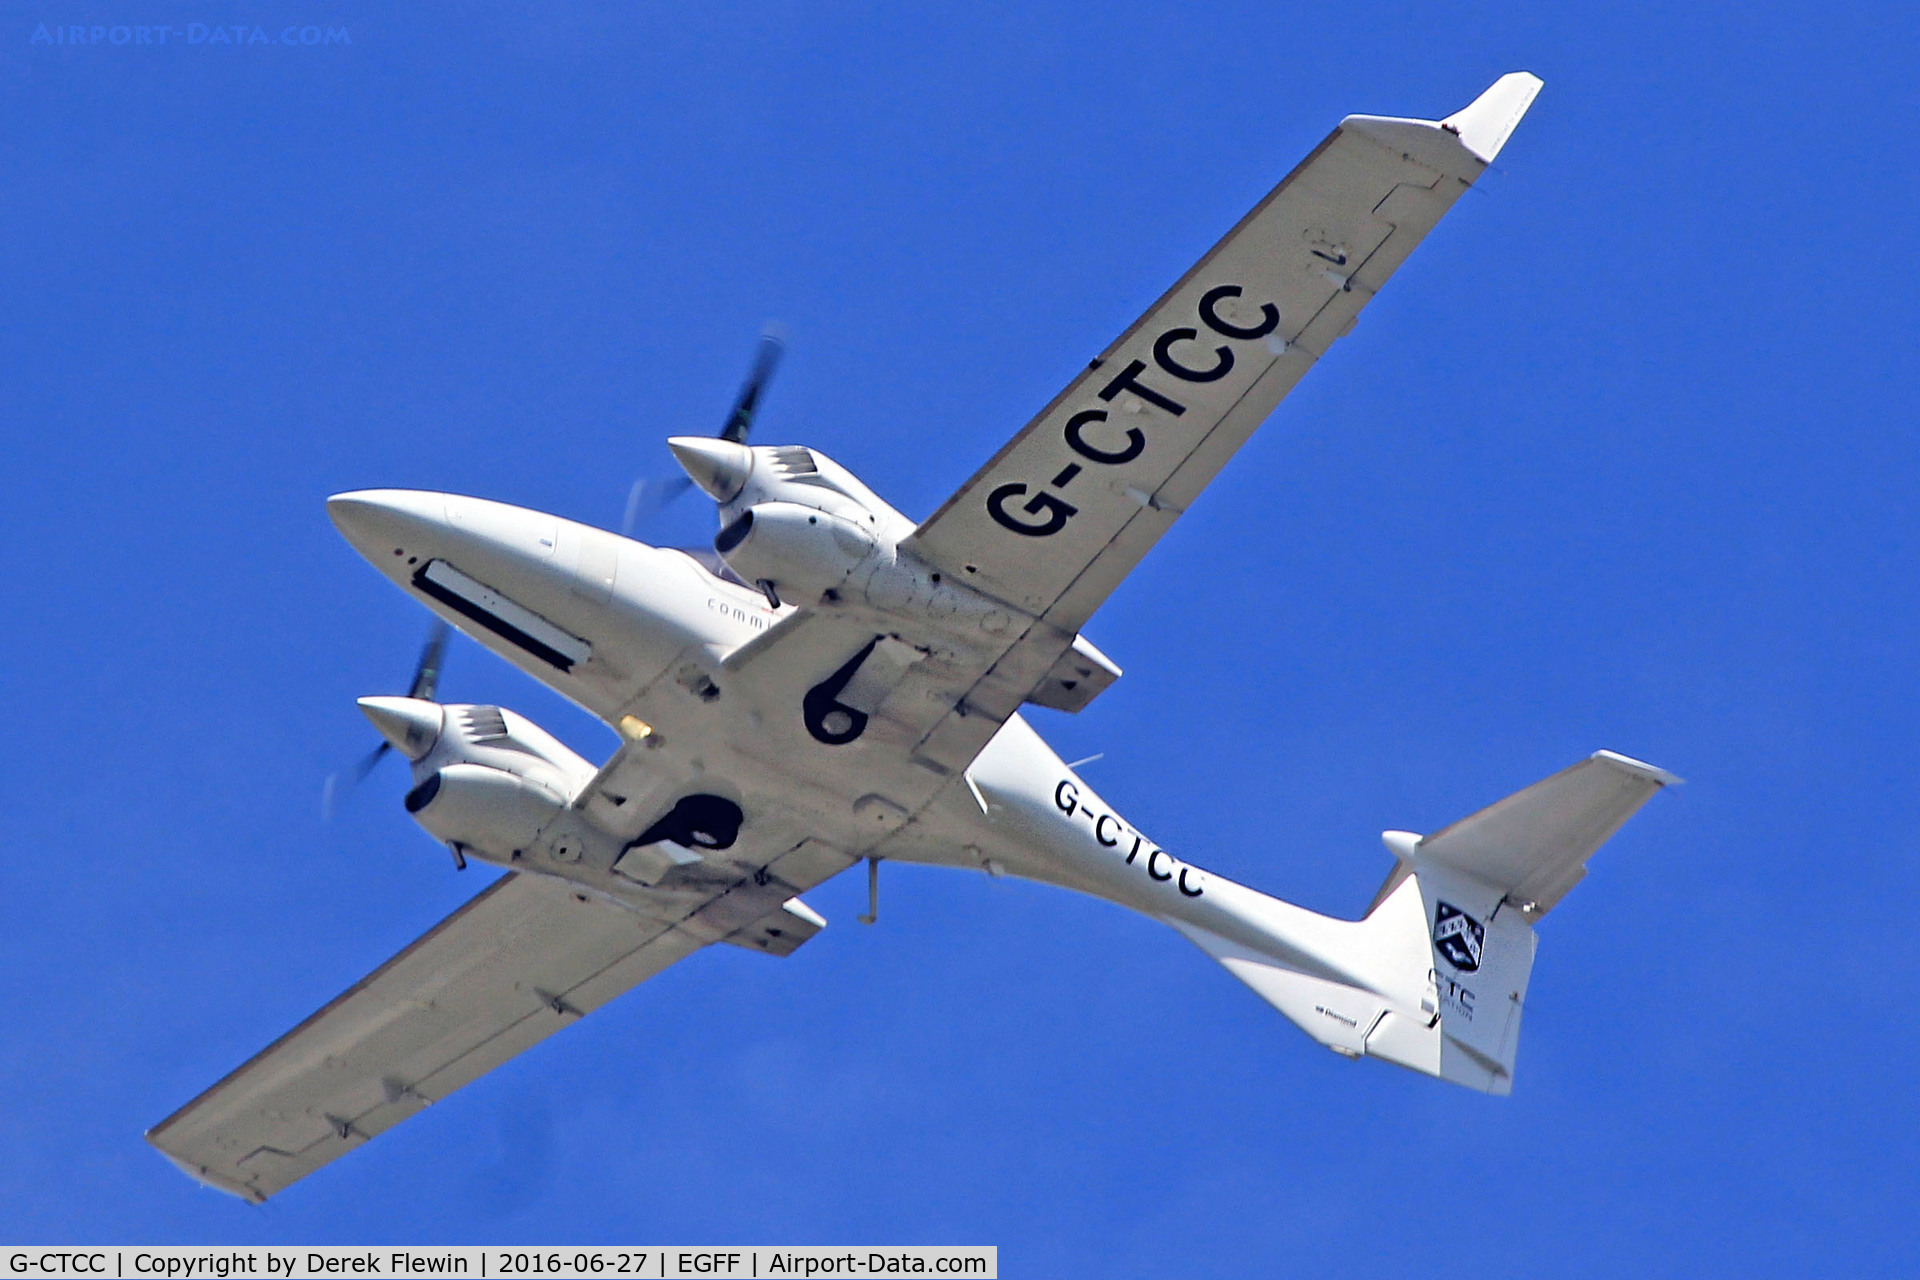 G-CTCC, 2006 Diamond DA-42 Twin Star C/N 42.161, Diamond DA-42, Bournemouth based, callsign Exam21, previously G-OCCZ, in the overhead following a go-round.